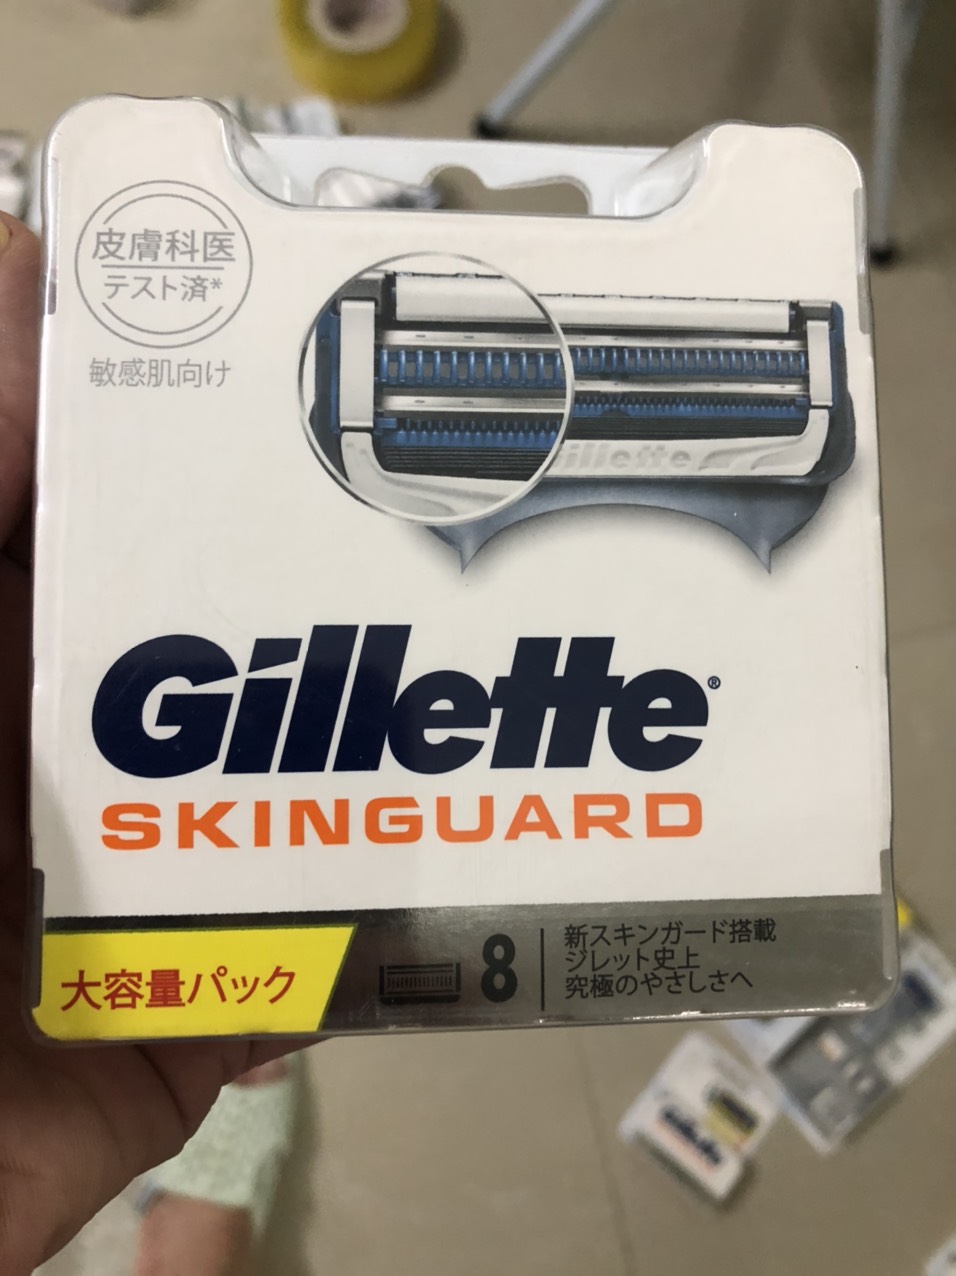 Dao cạo râu gillette Skinguard Nhật bản cho làn da nhạy cảm hộp 8 lưỡi